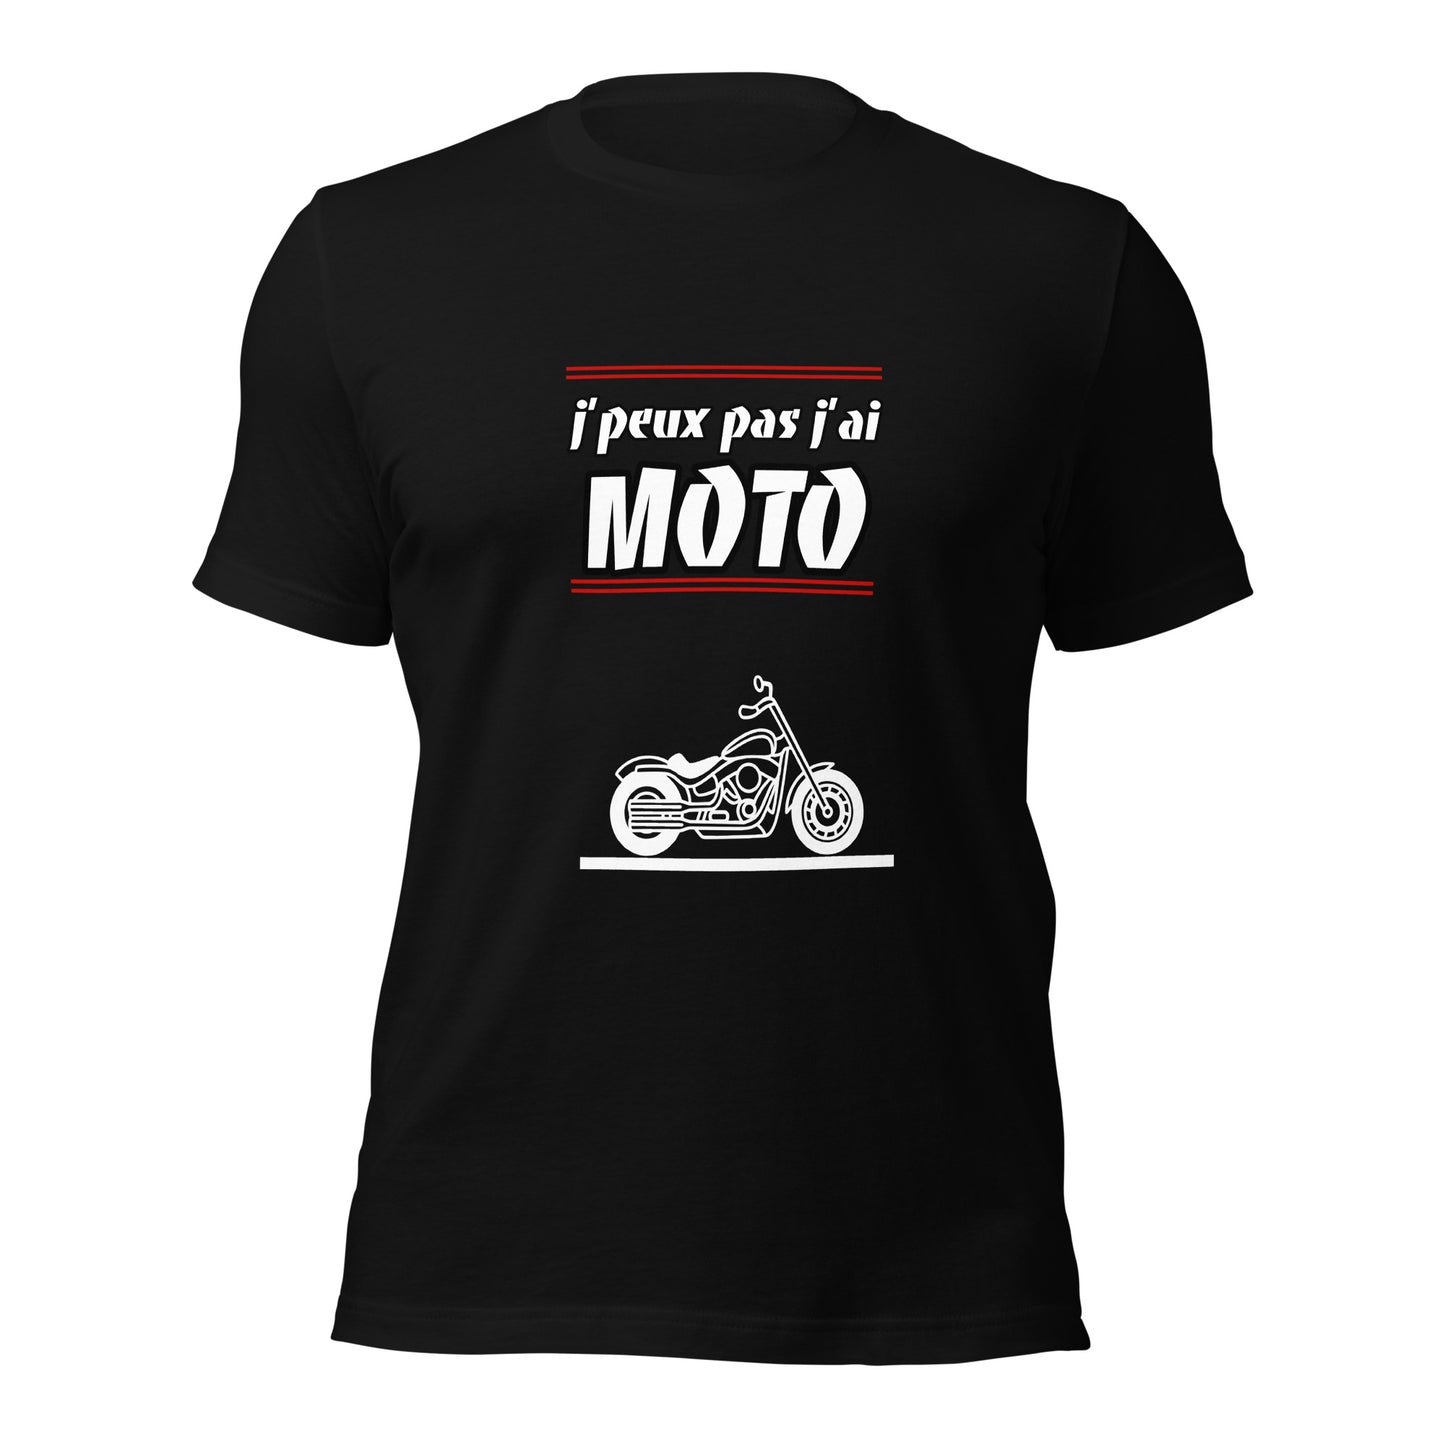 T-shirt "J'peux pas j'ai moto"